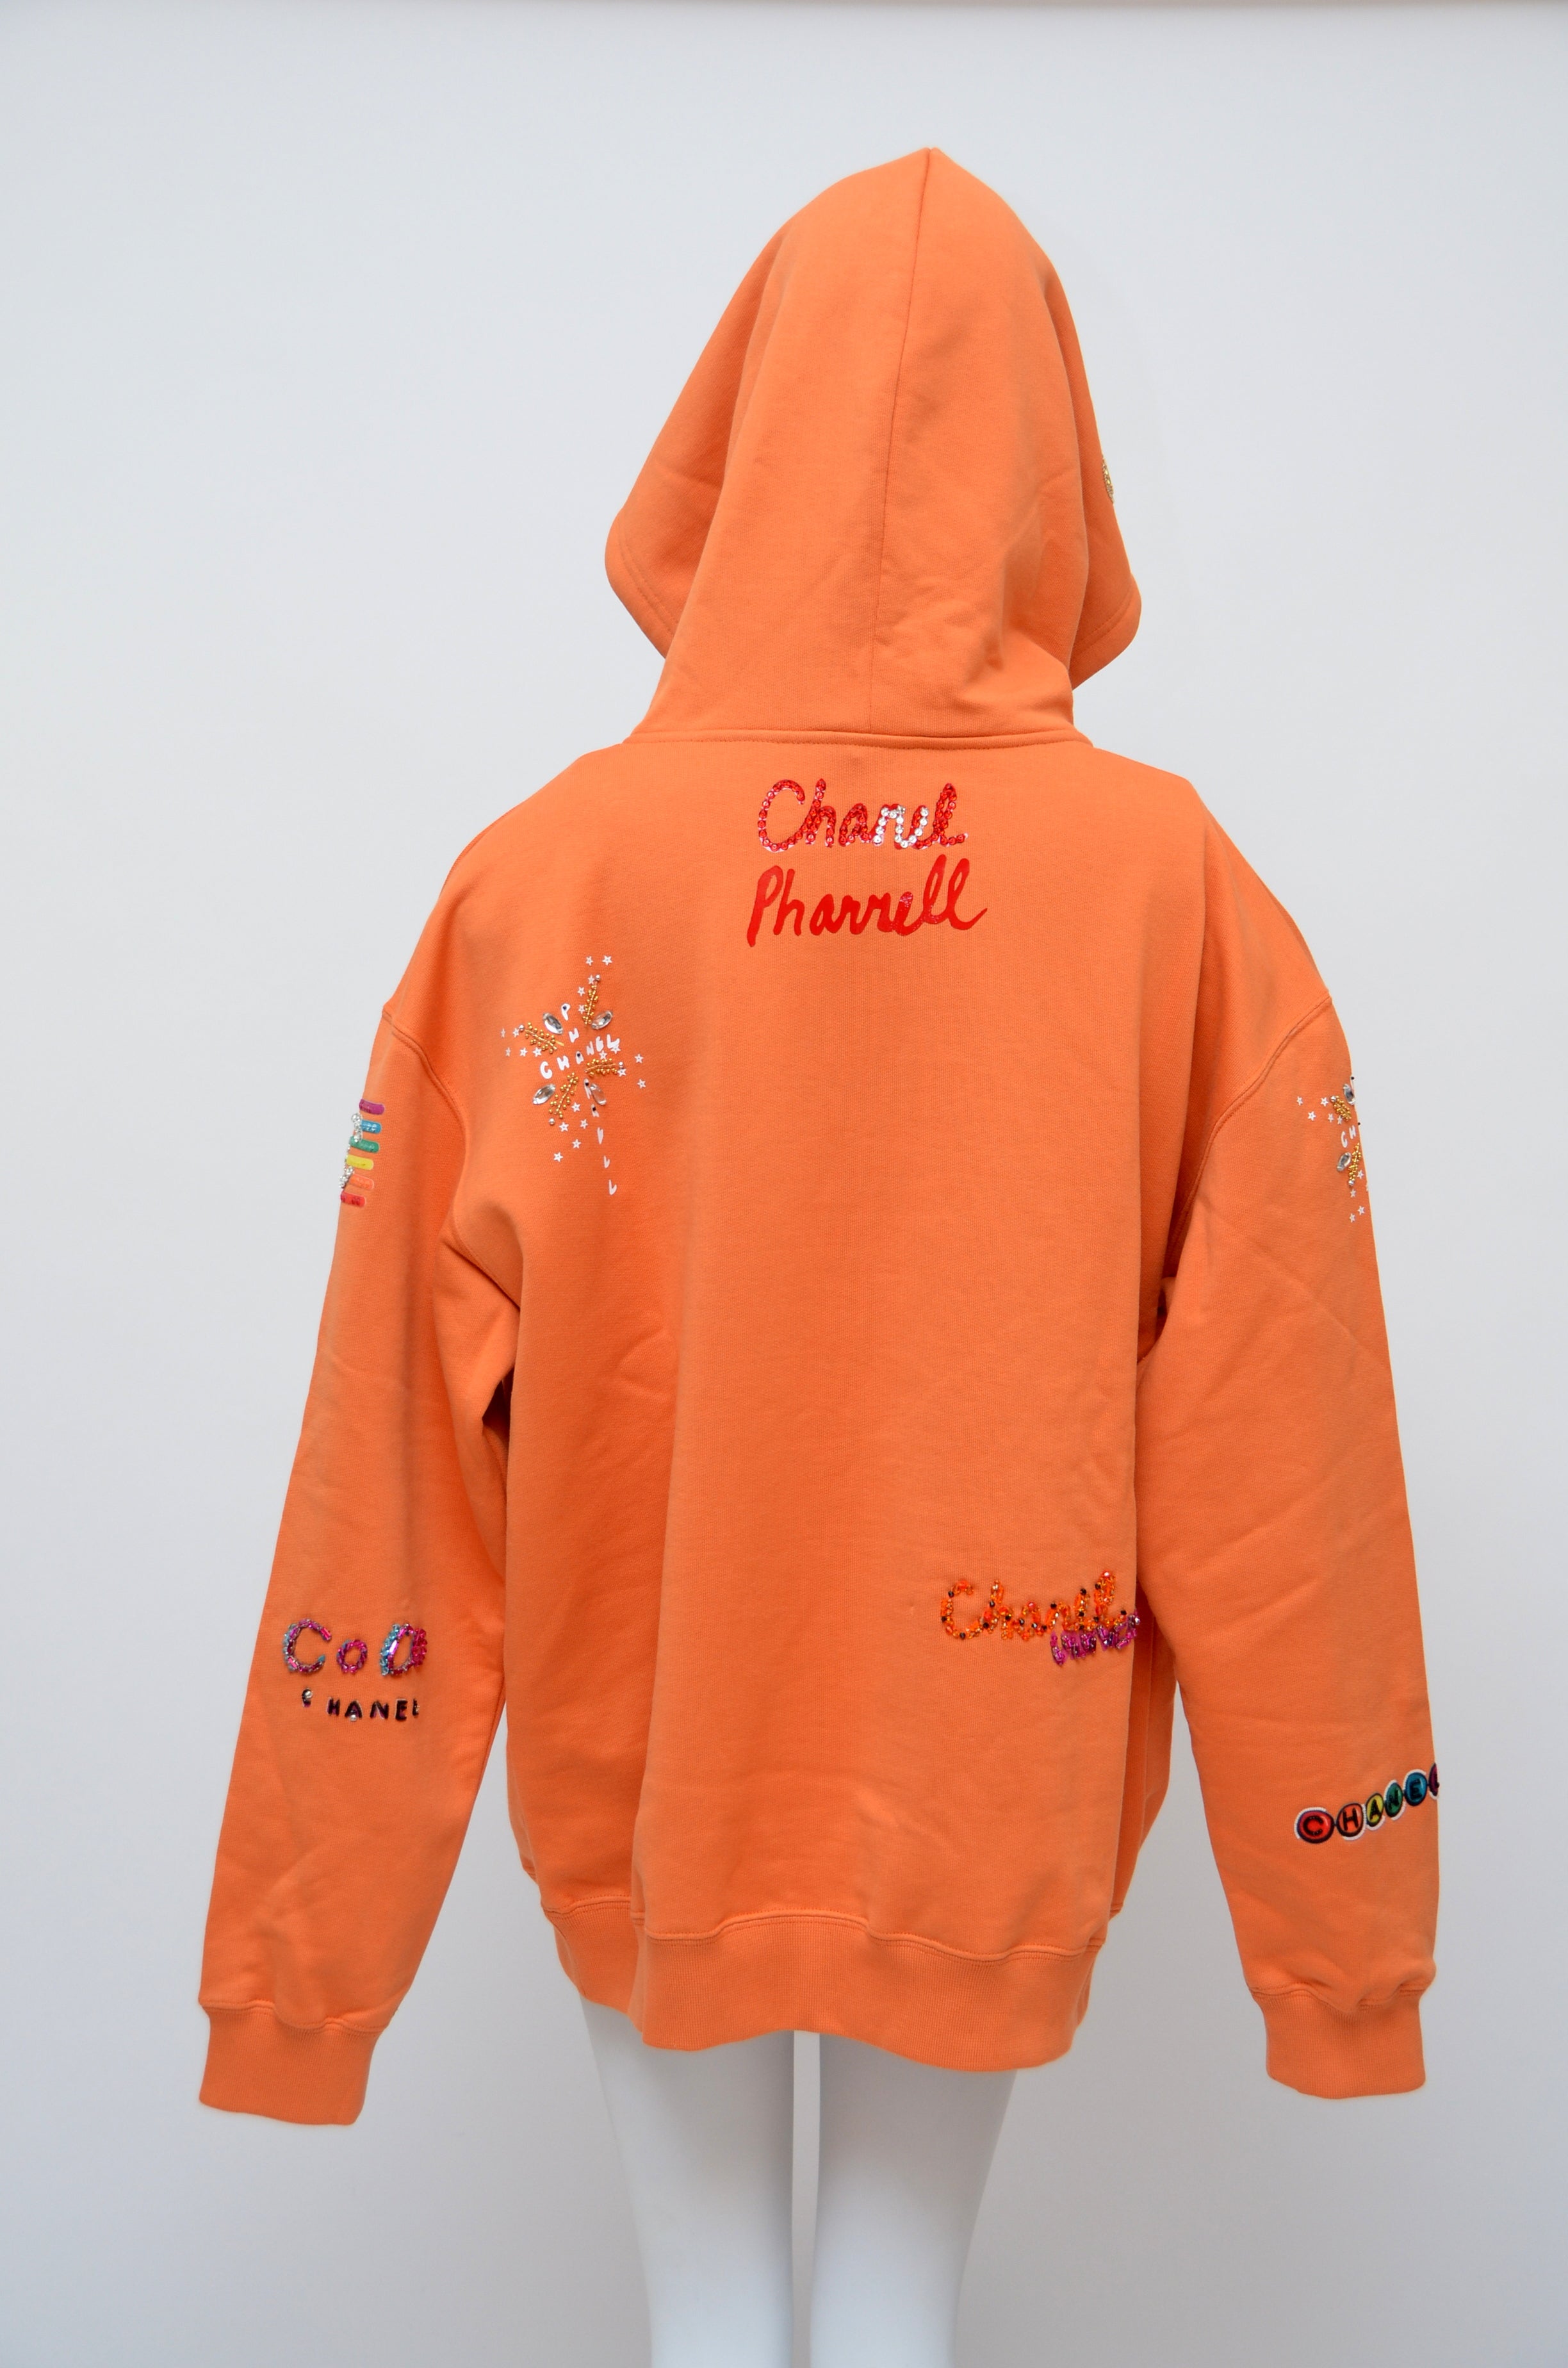 chanel pharrell hoodie